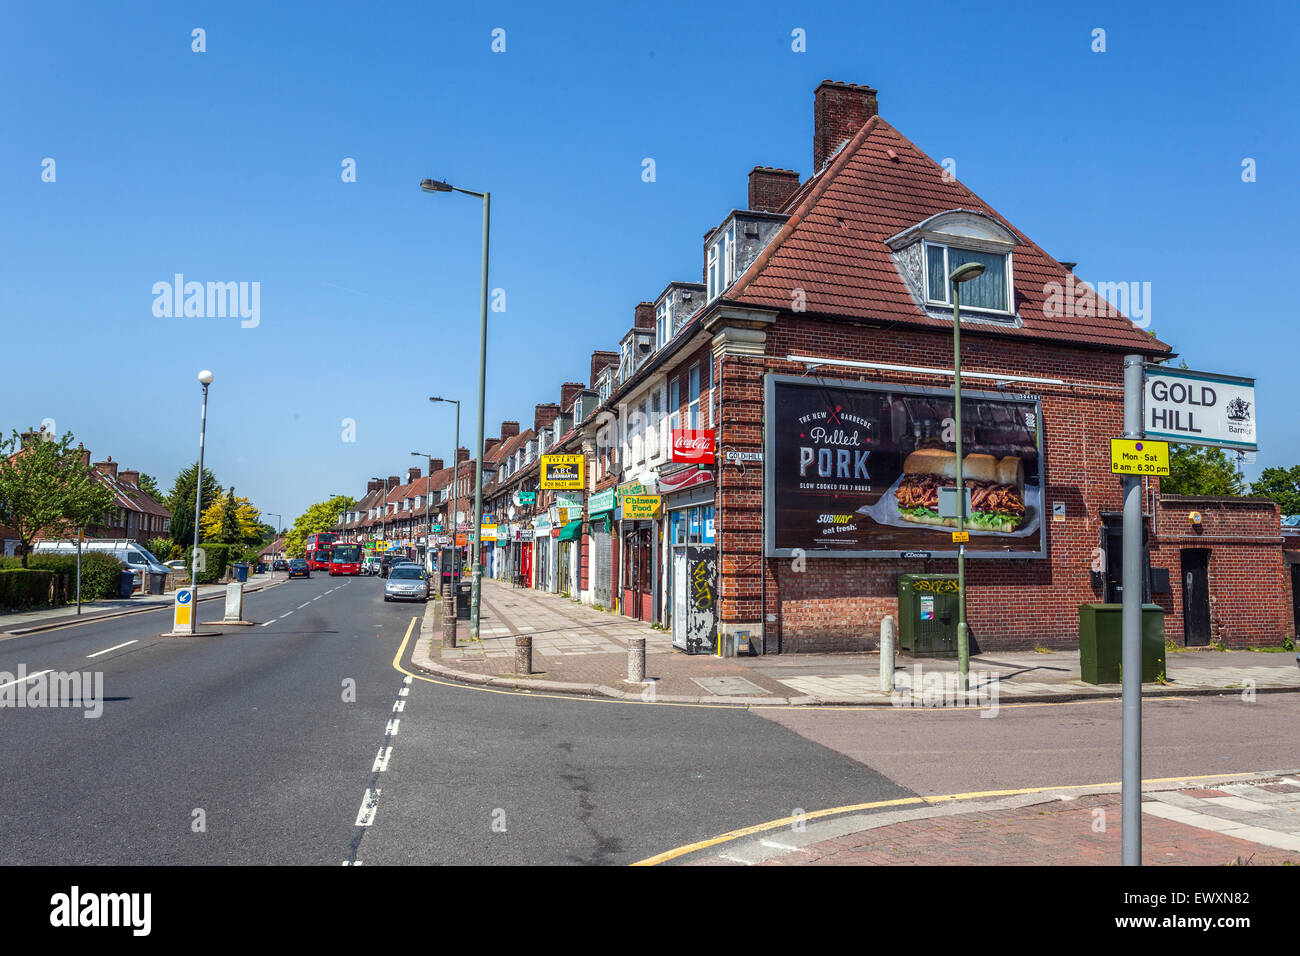 Row of houses and shops on Deansbrook Road, High street, Edgware, HA8, England, UK Stock Photo